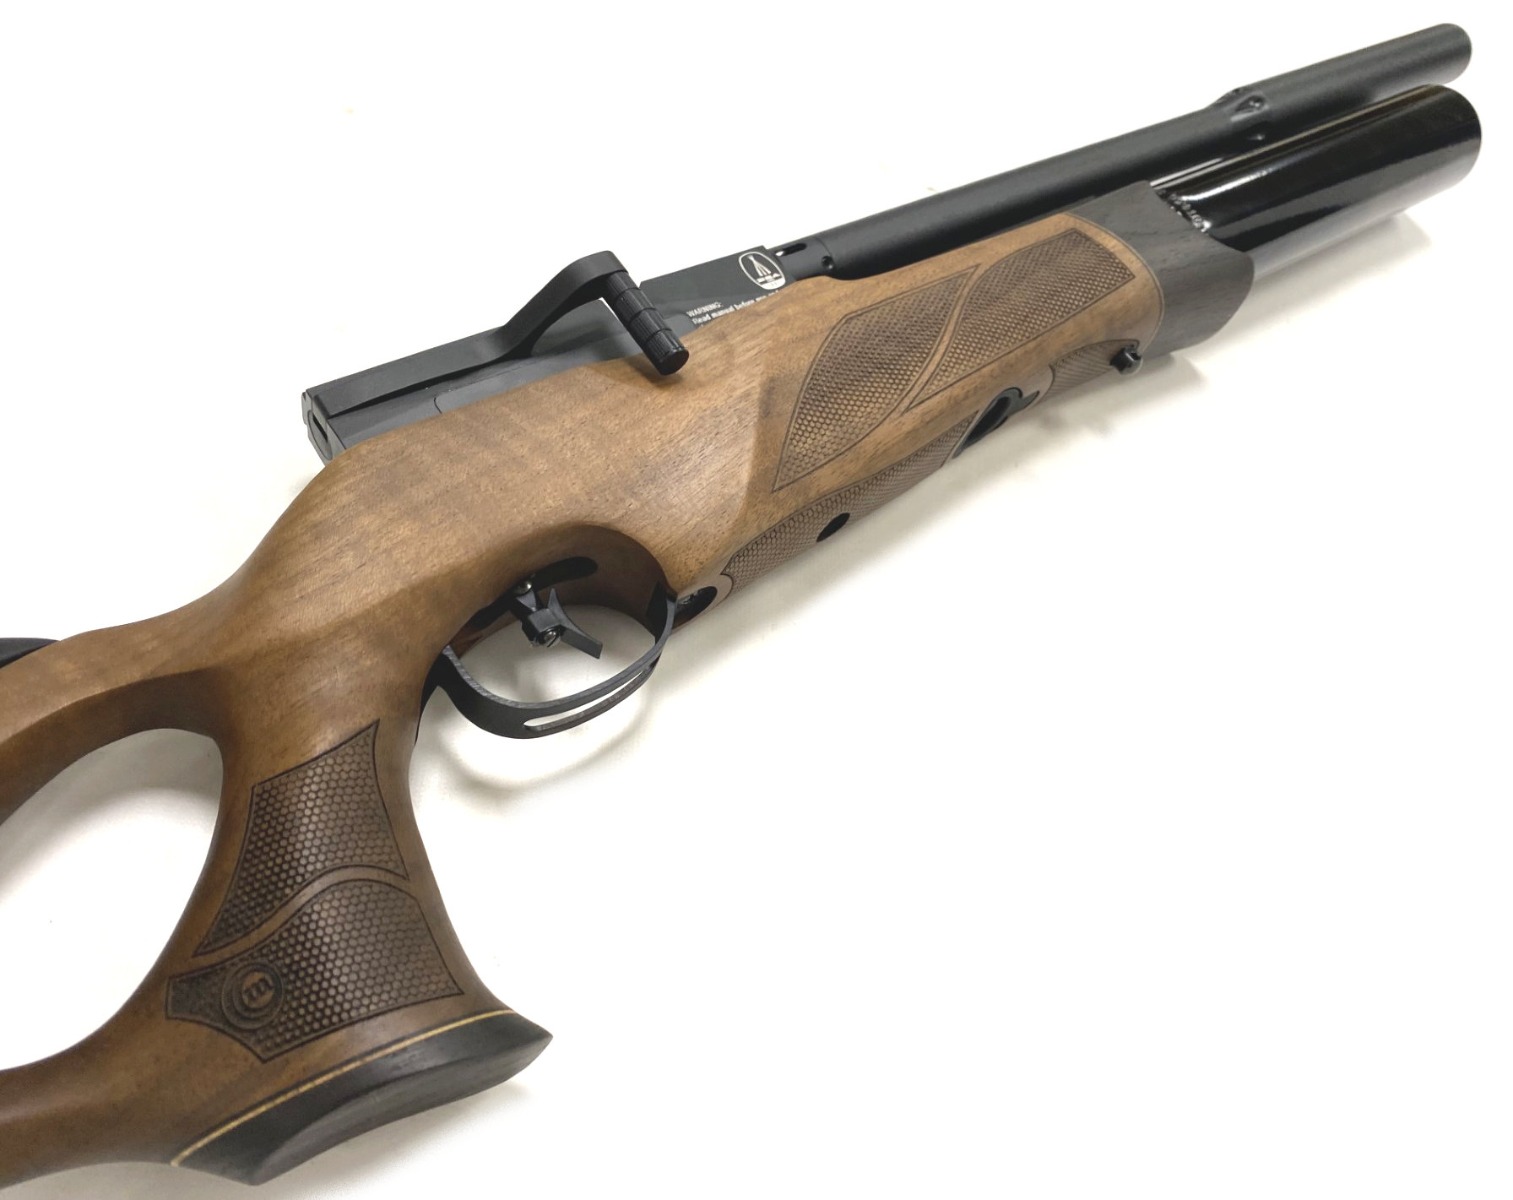 BSA R12 CLX Pro Walnut Super Carbine .177 Air Rifle - 230718/001 Image 4